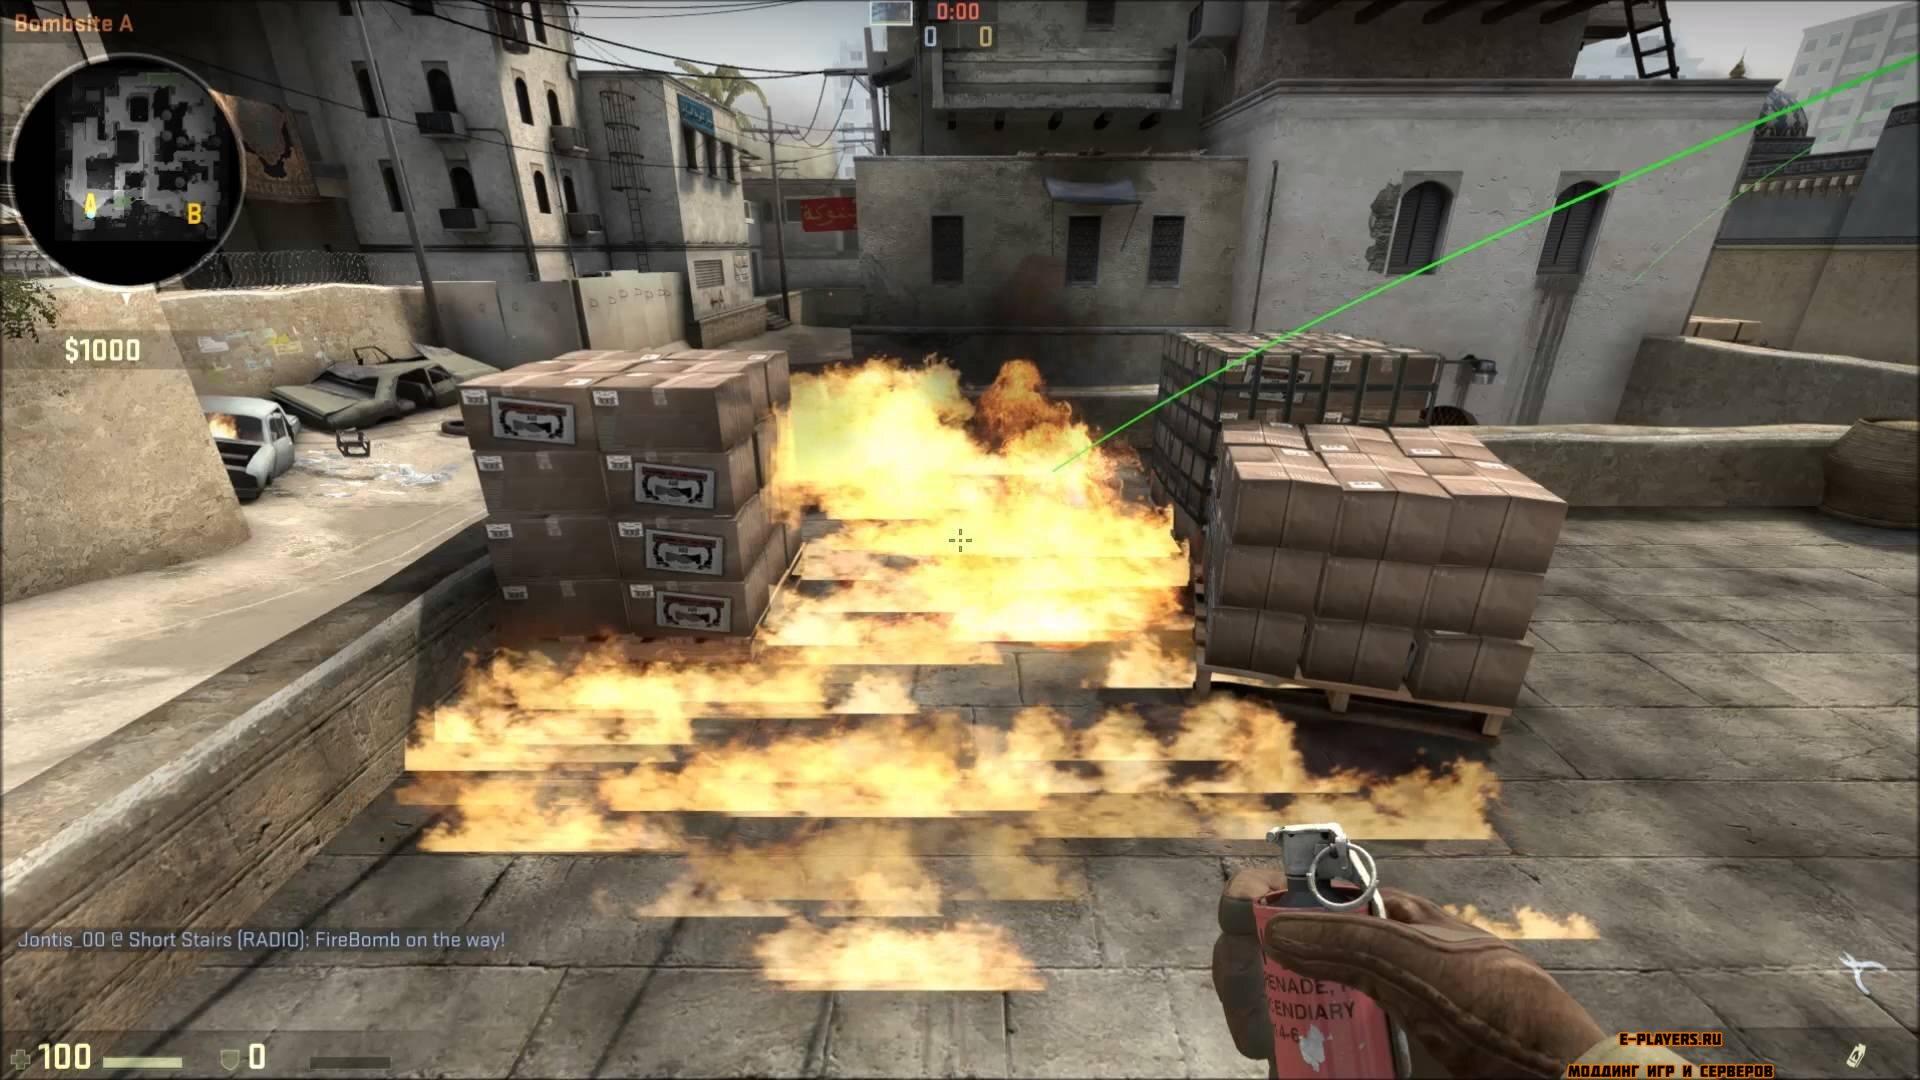 [CS:GO]Отключение урона от союзников,кроме молотова / Blocking Friendly Fire, enable molotov damage for 5v5